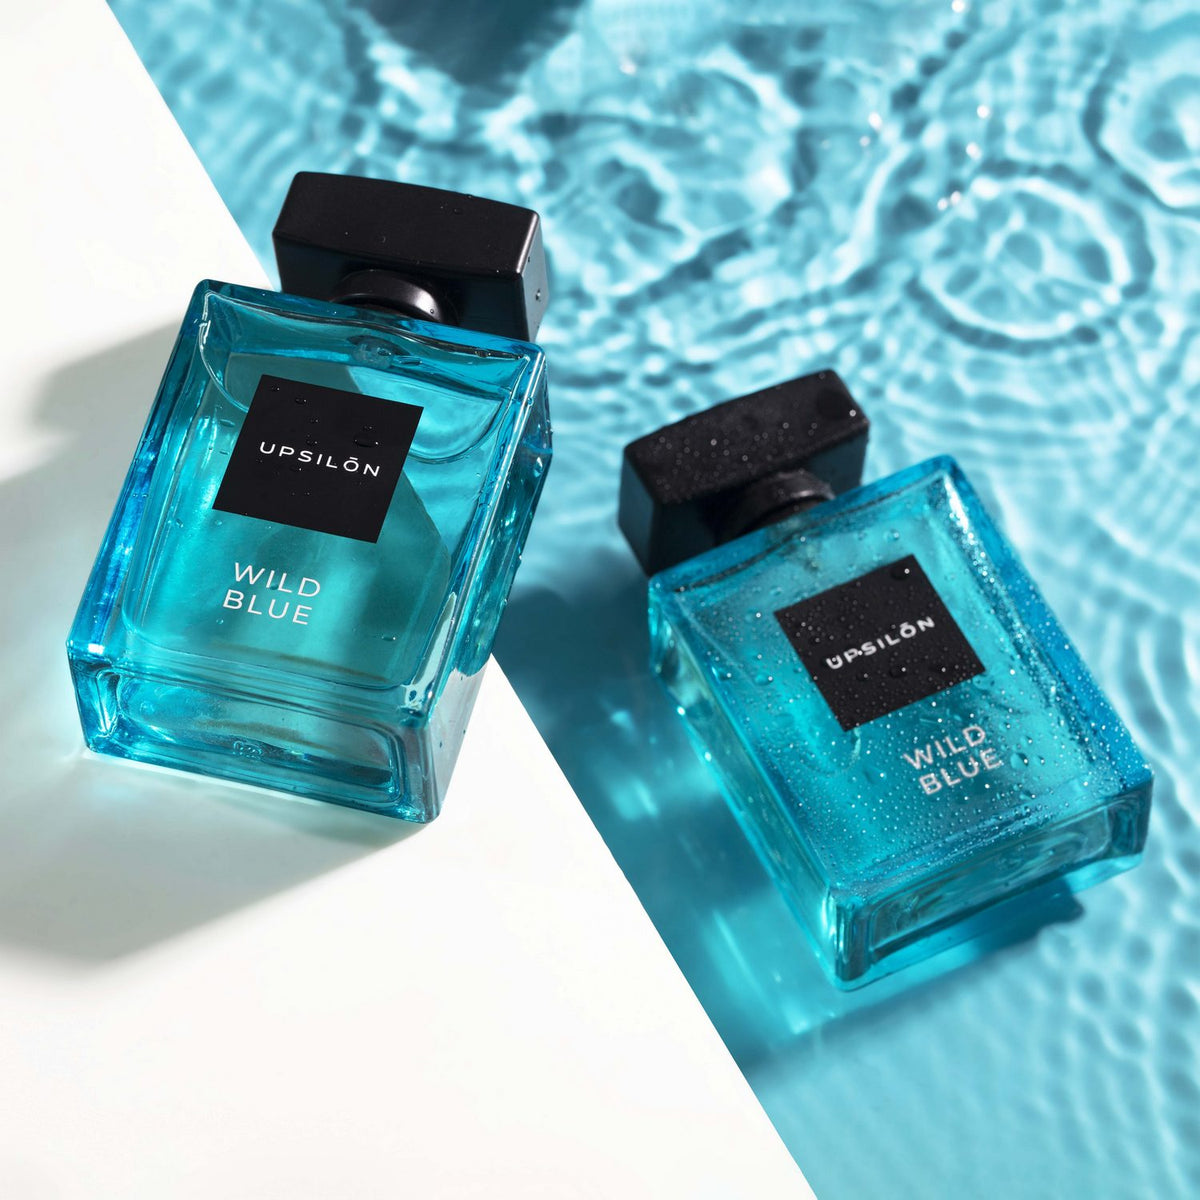 Upsilon Wild Blue Eau de Parfum for men, a fresh and powerful fragrance with citrus and aquatic notes